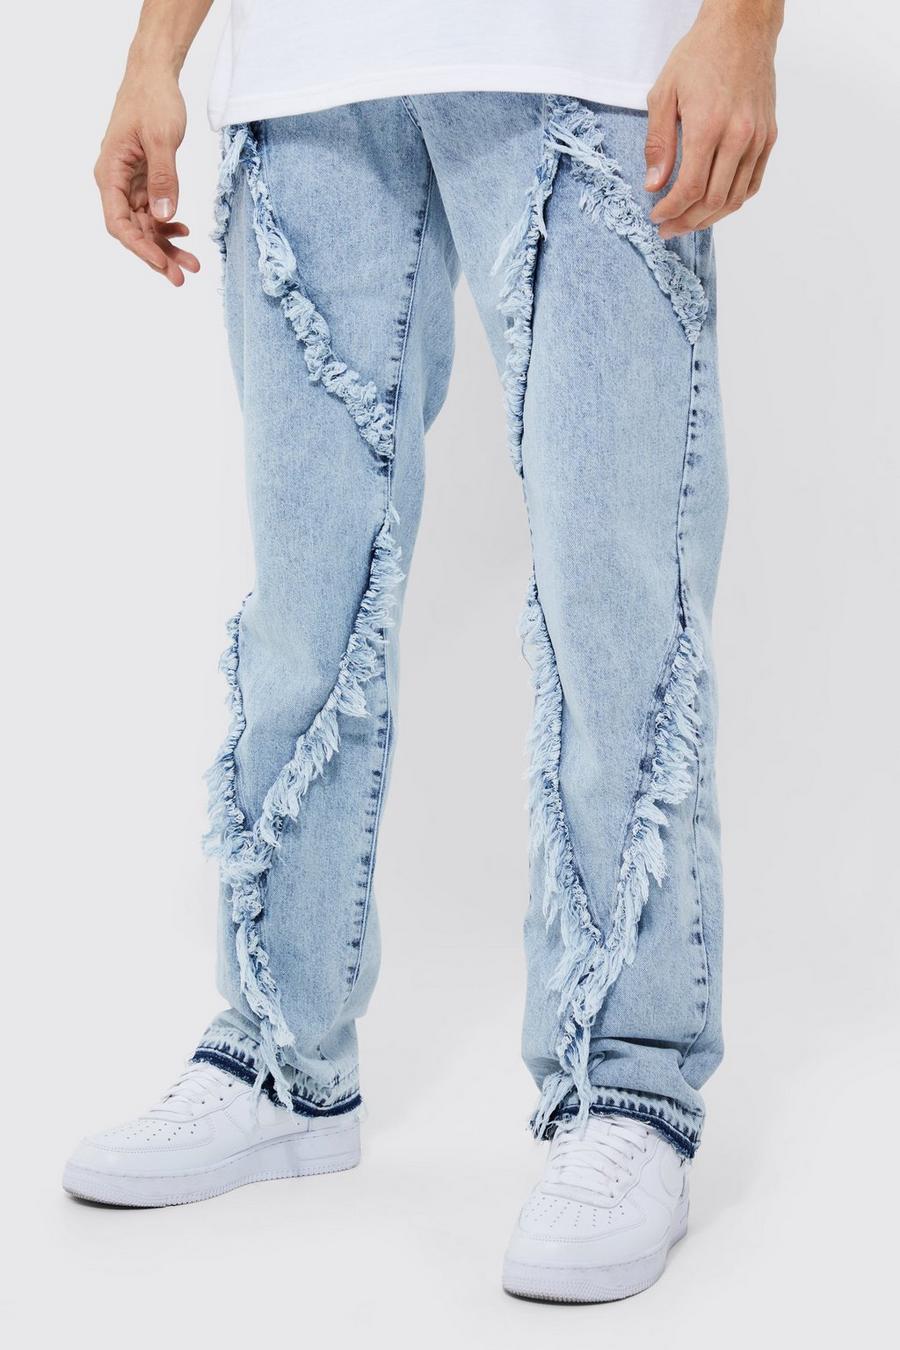 https://media.boohoo.com/i/boohoo/bmm35447_ice%20blue_xl/male-ice%20blue-tall-relaxed-fit-distressed-jeans/?w=900&qlt=default&fmt.jp2.qlt=70&fmt=auto&sm=fit